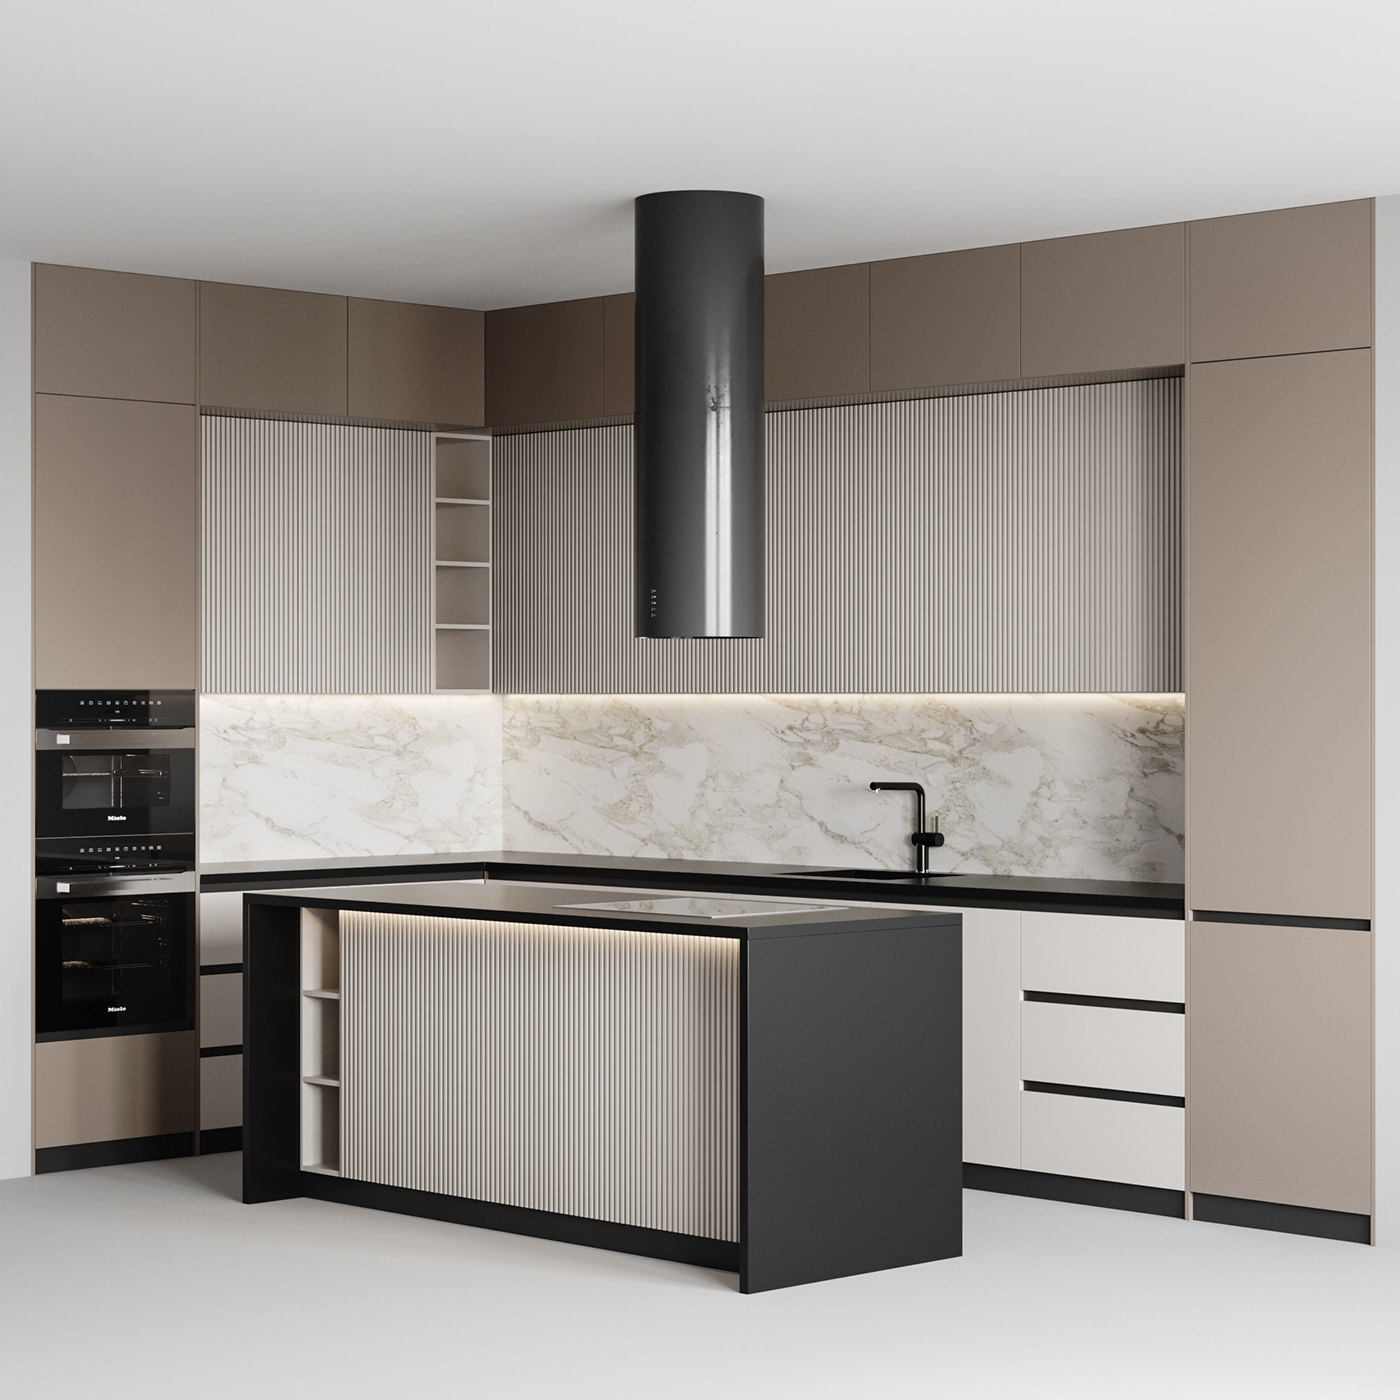 3dmodel archviz corona Interior interior design  kitchen KITCHEN 3D MODEL kitchen design modern kitchen Render